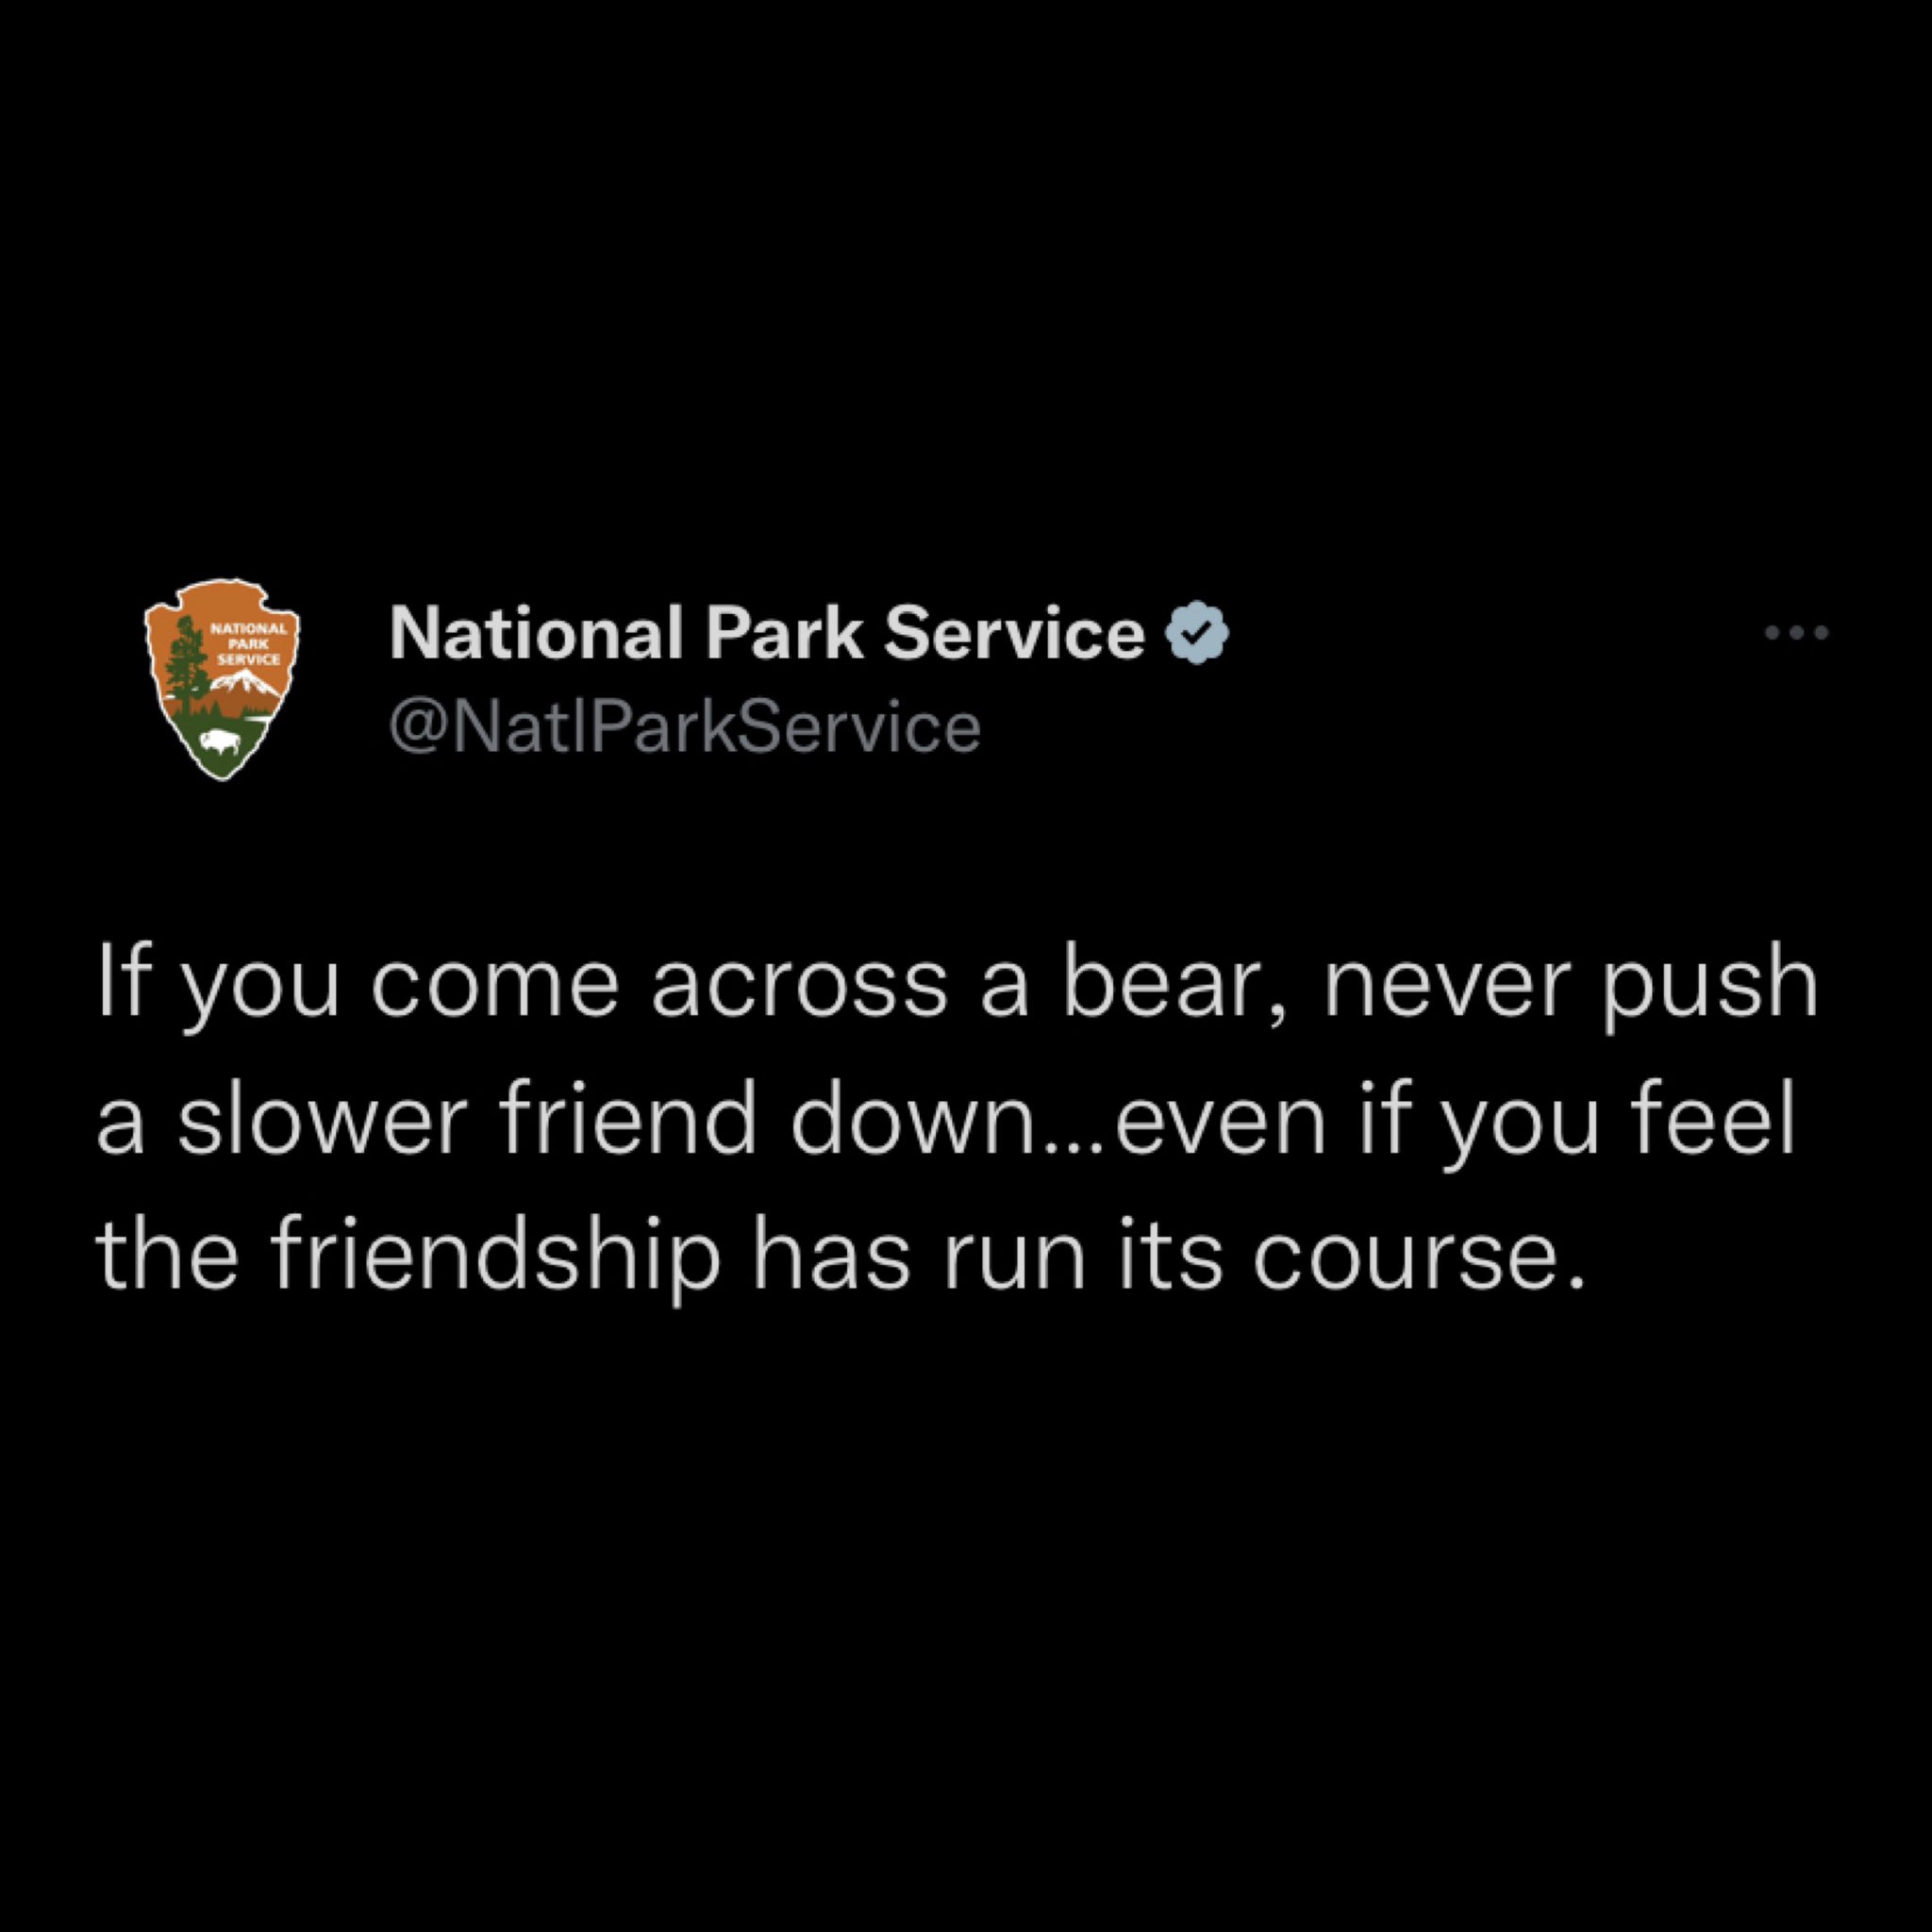 Do not 'push a slower friend down' if you encounter a bear, Nati - WFXG